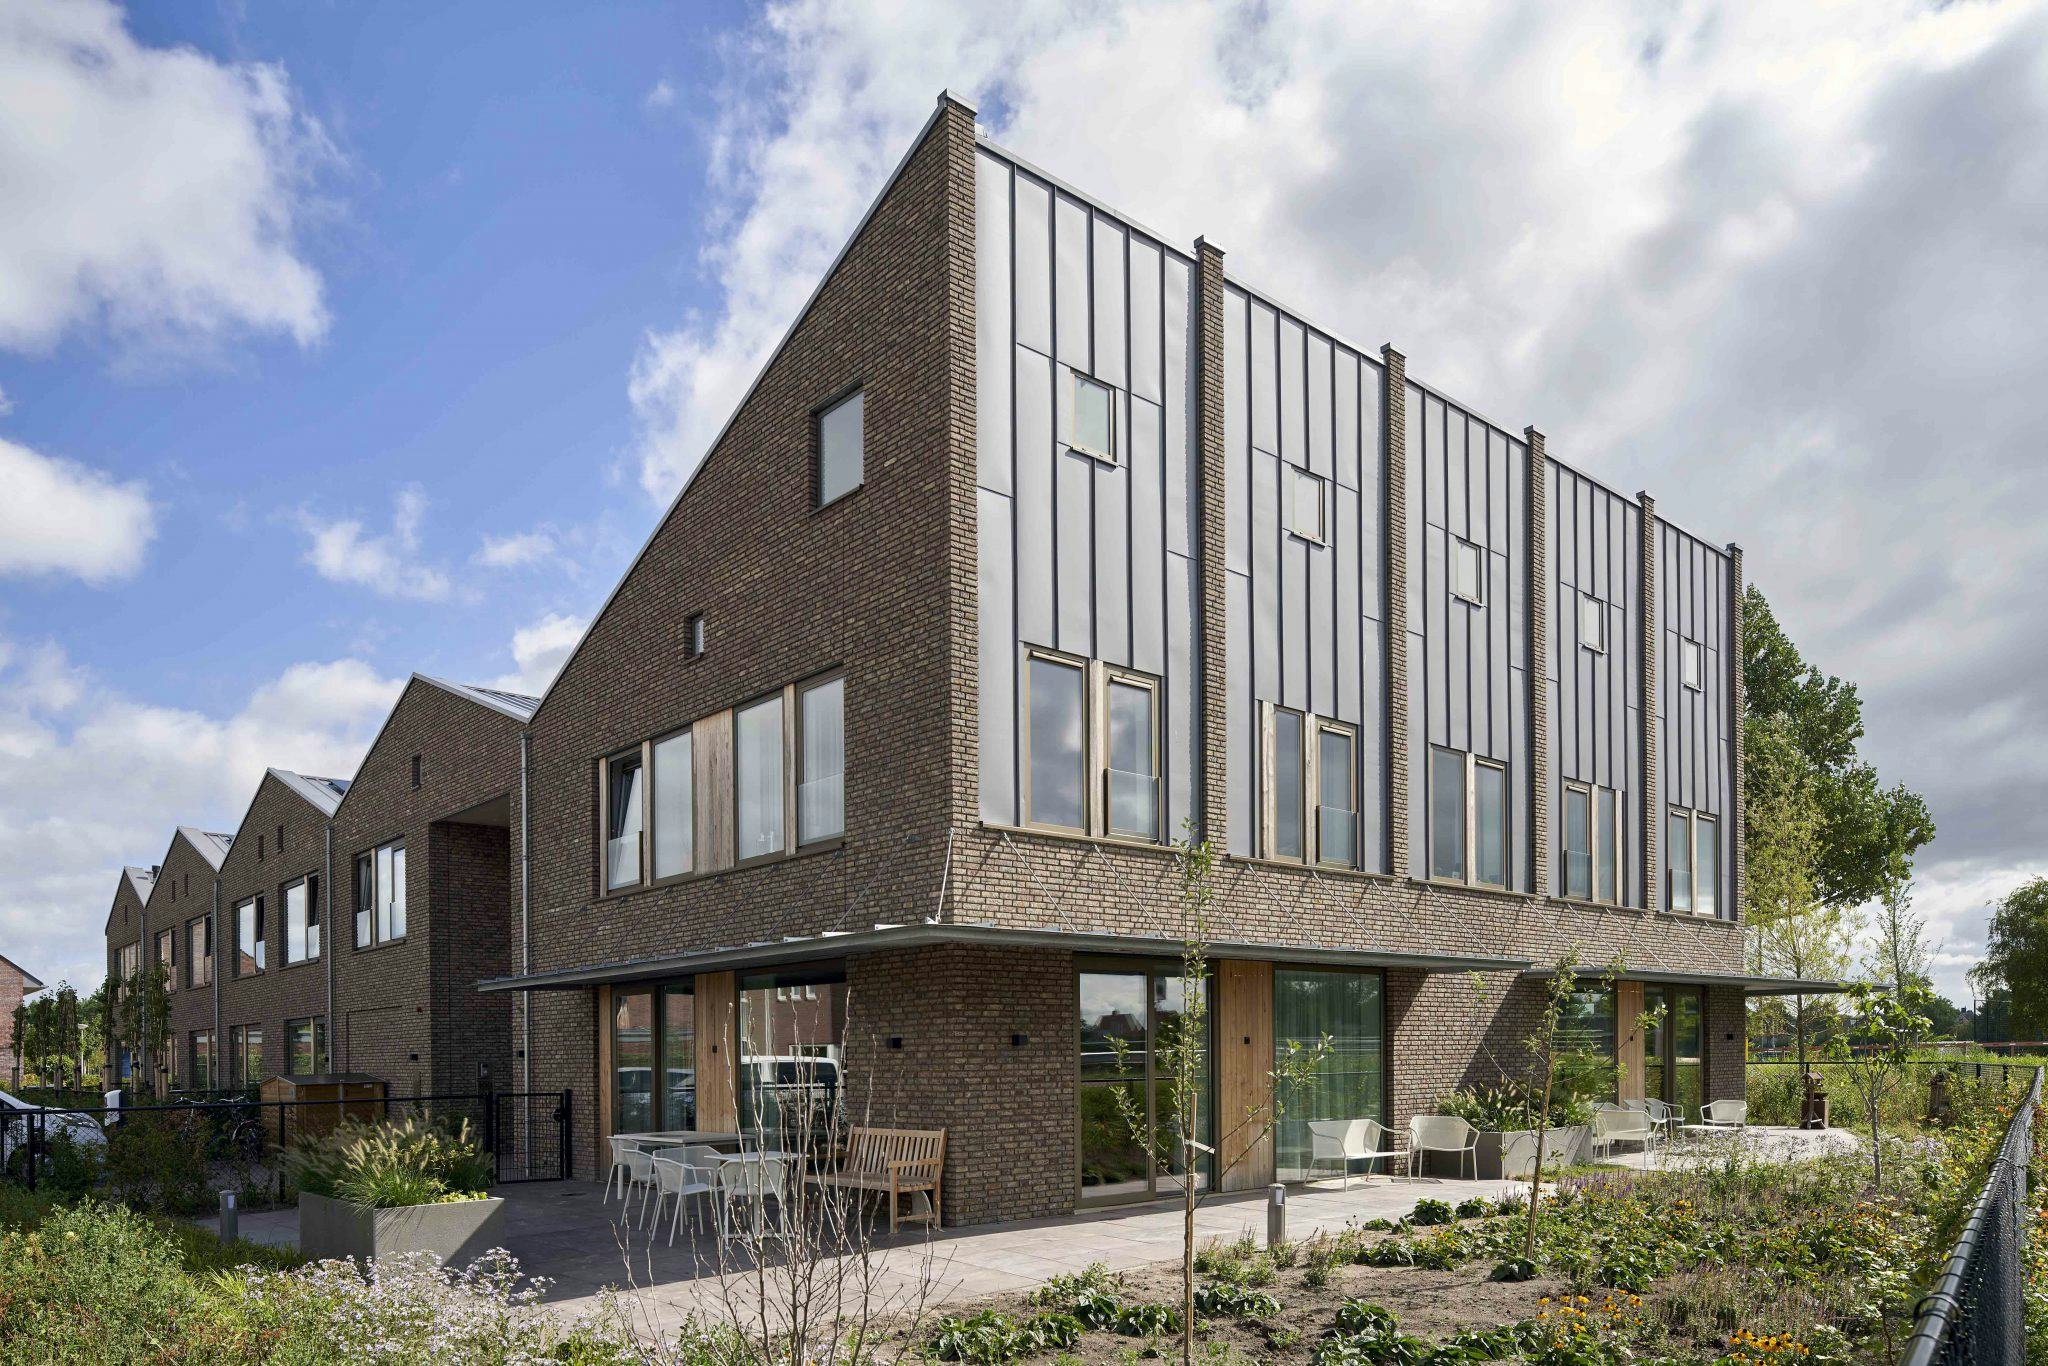 Gastenhuis Vleuten
Architect: B+O architects
Opdrachtgever: Amvest
